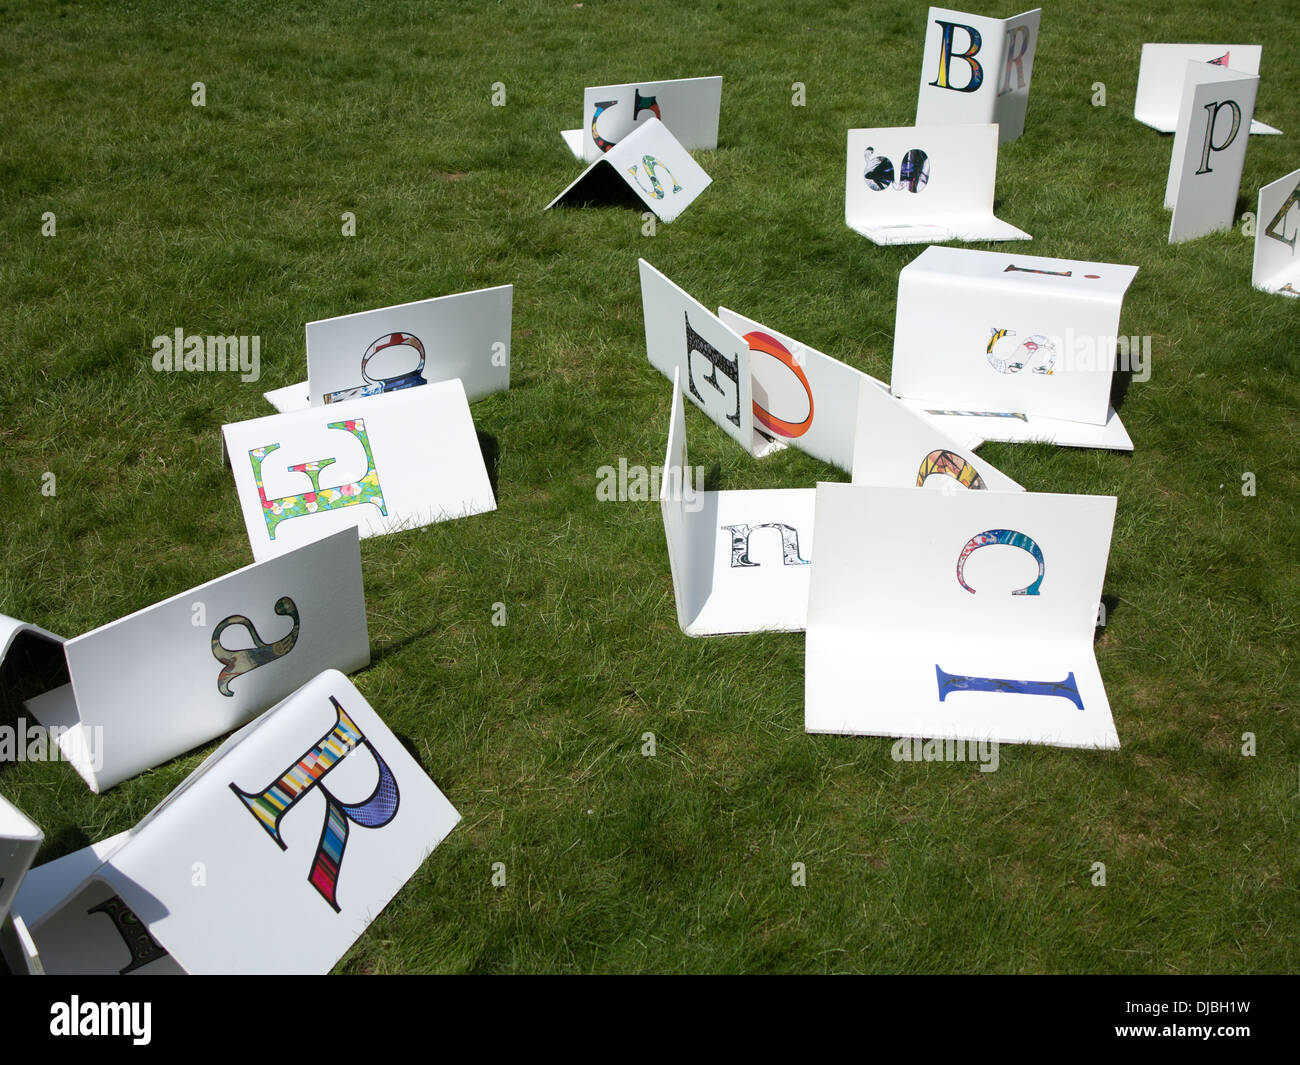 Random Letters randomly spread on grass jumbled up Stock Photo